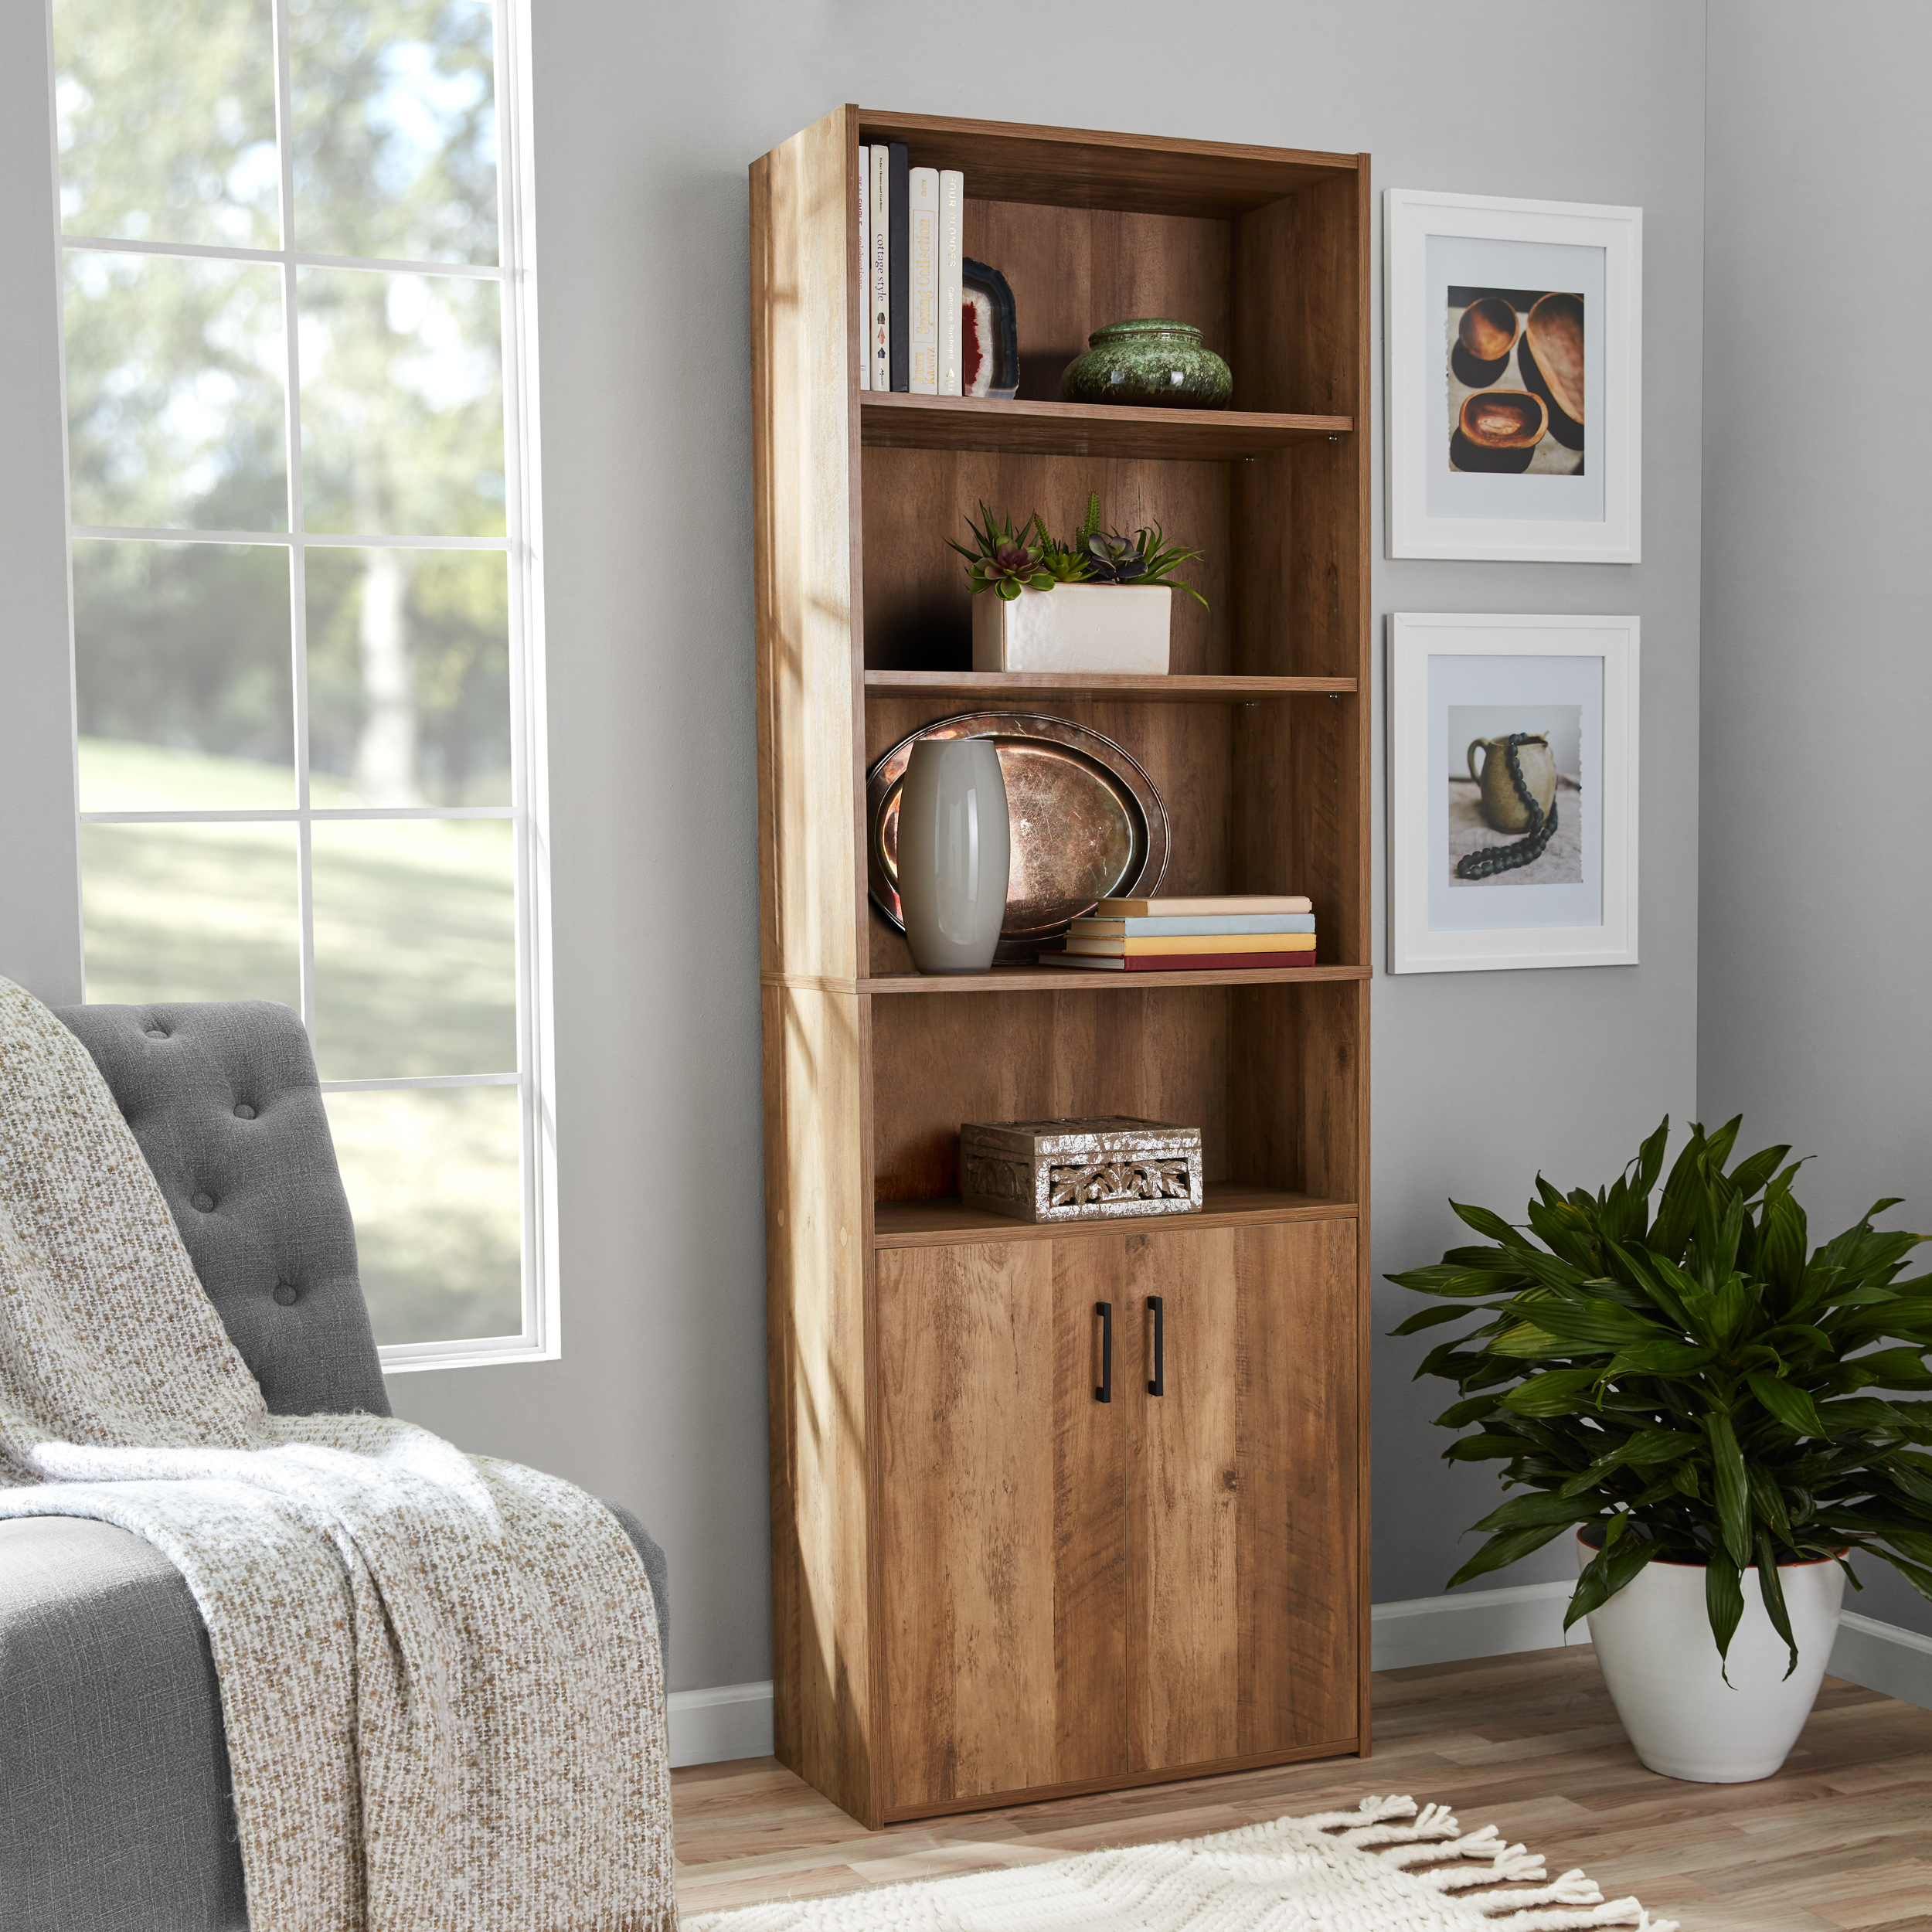 Mainstays Traditional 5 Shelf Bookcase with Doors, Weathered Oak Finish - image 2 of 10